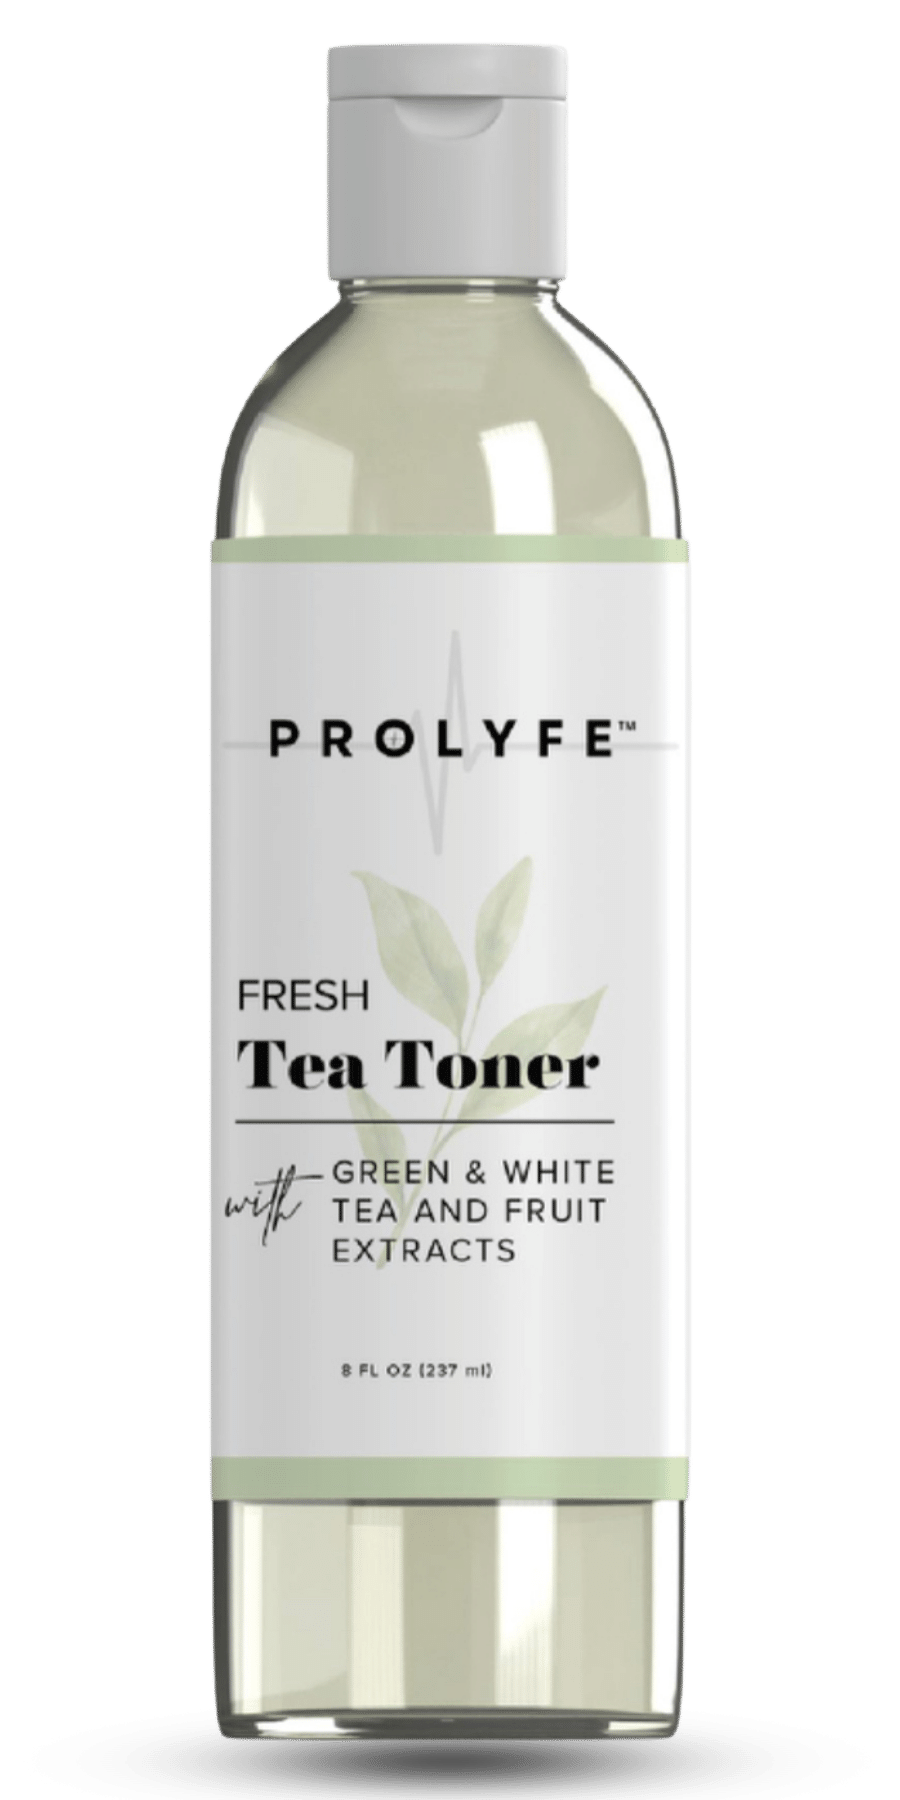 Tea toner prolyfe skincare